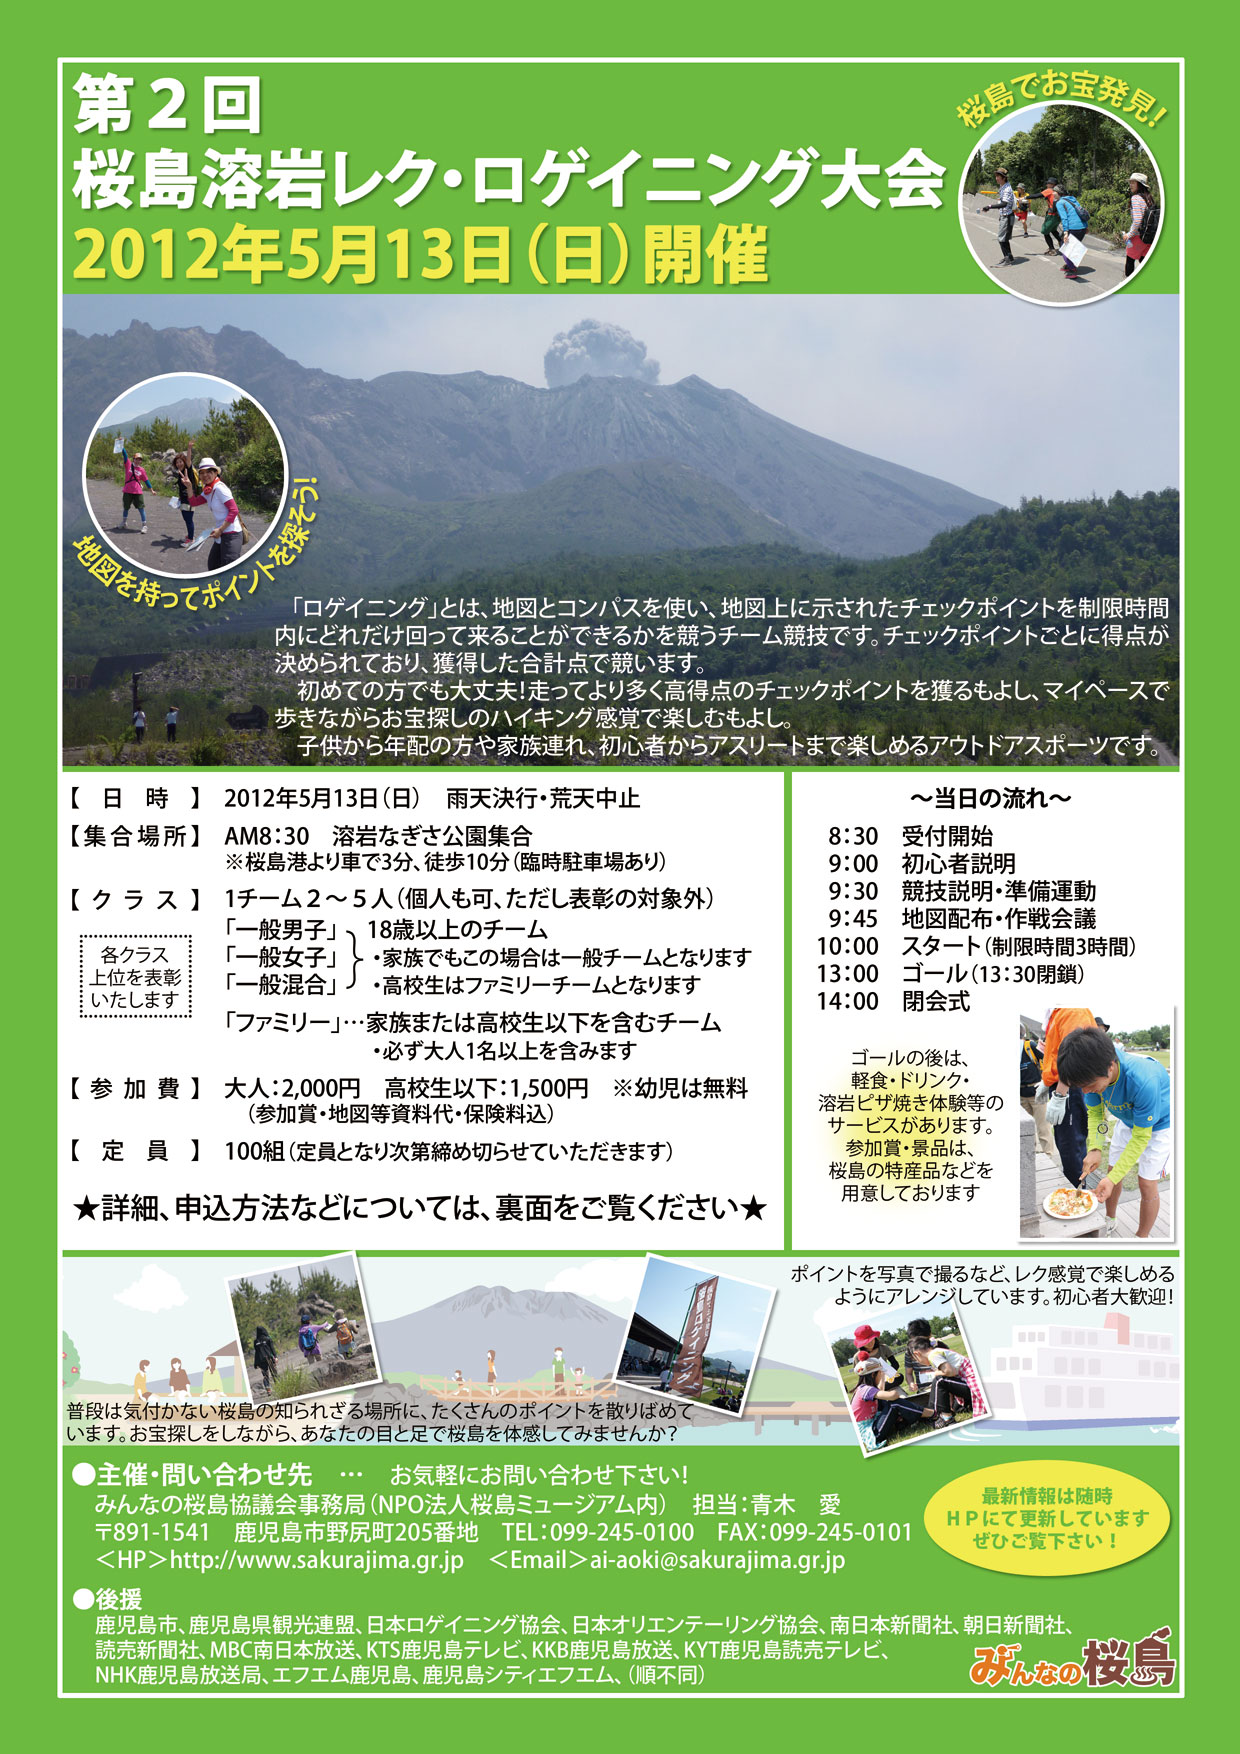 http://www.sakurajima.gr.jp/event/flier_web.jpg